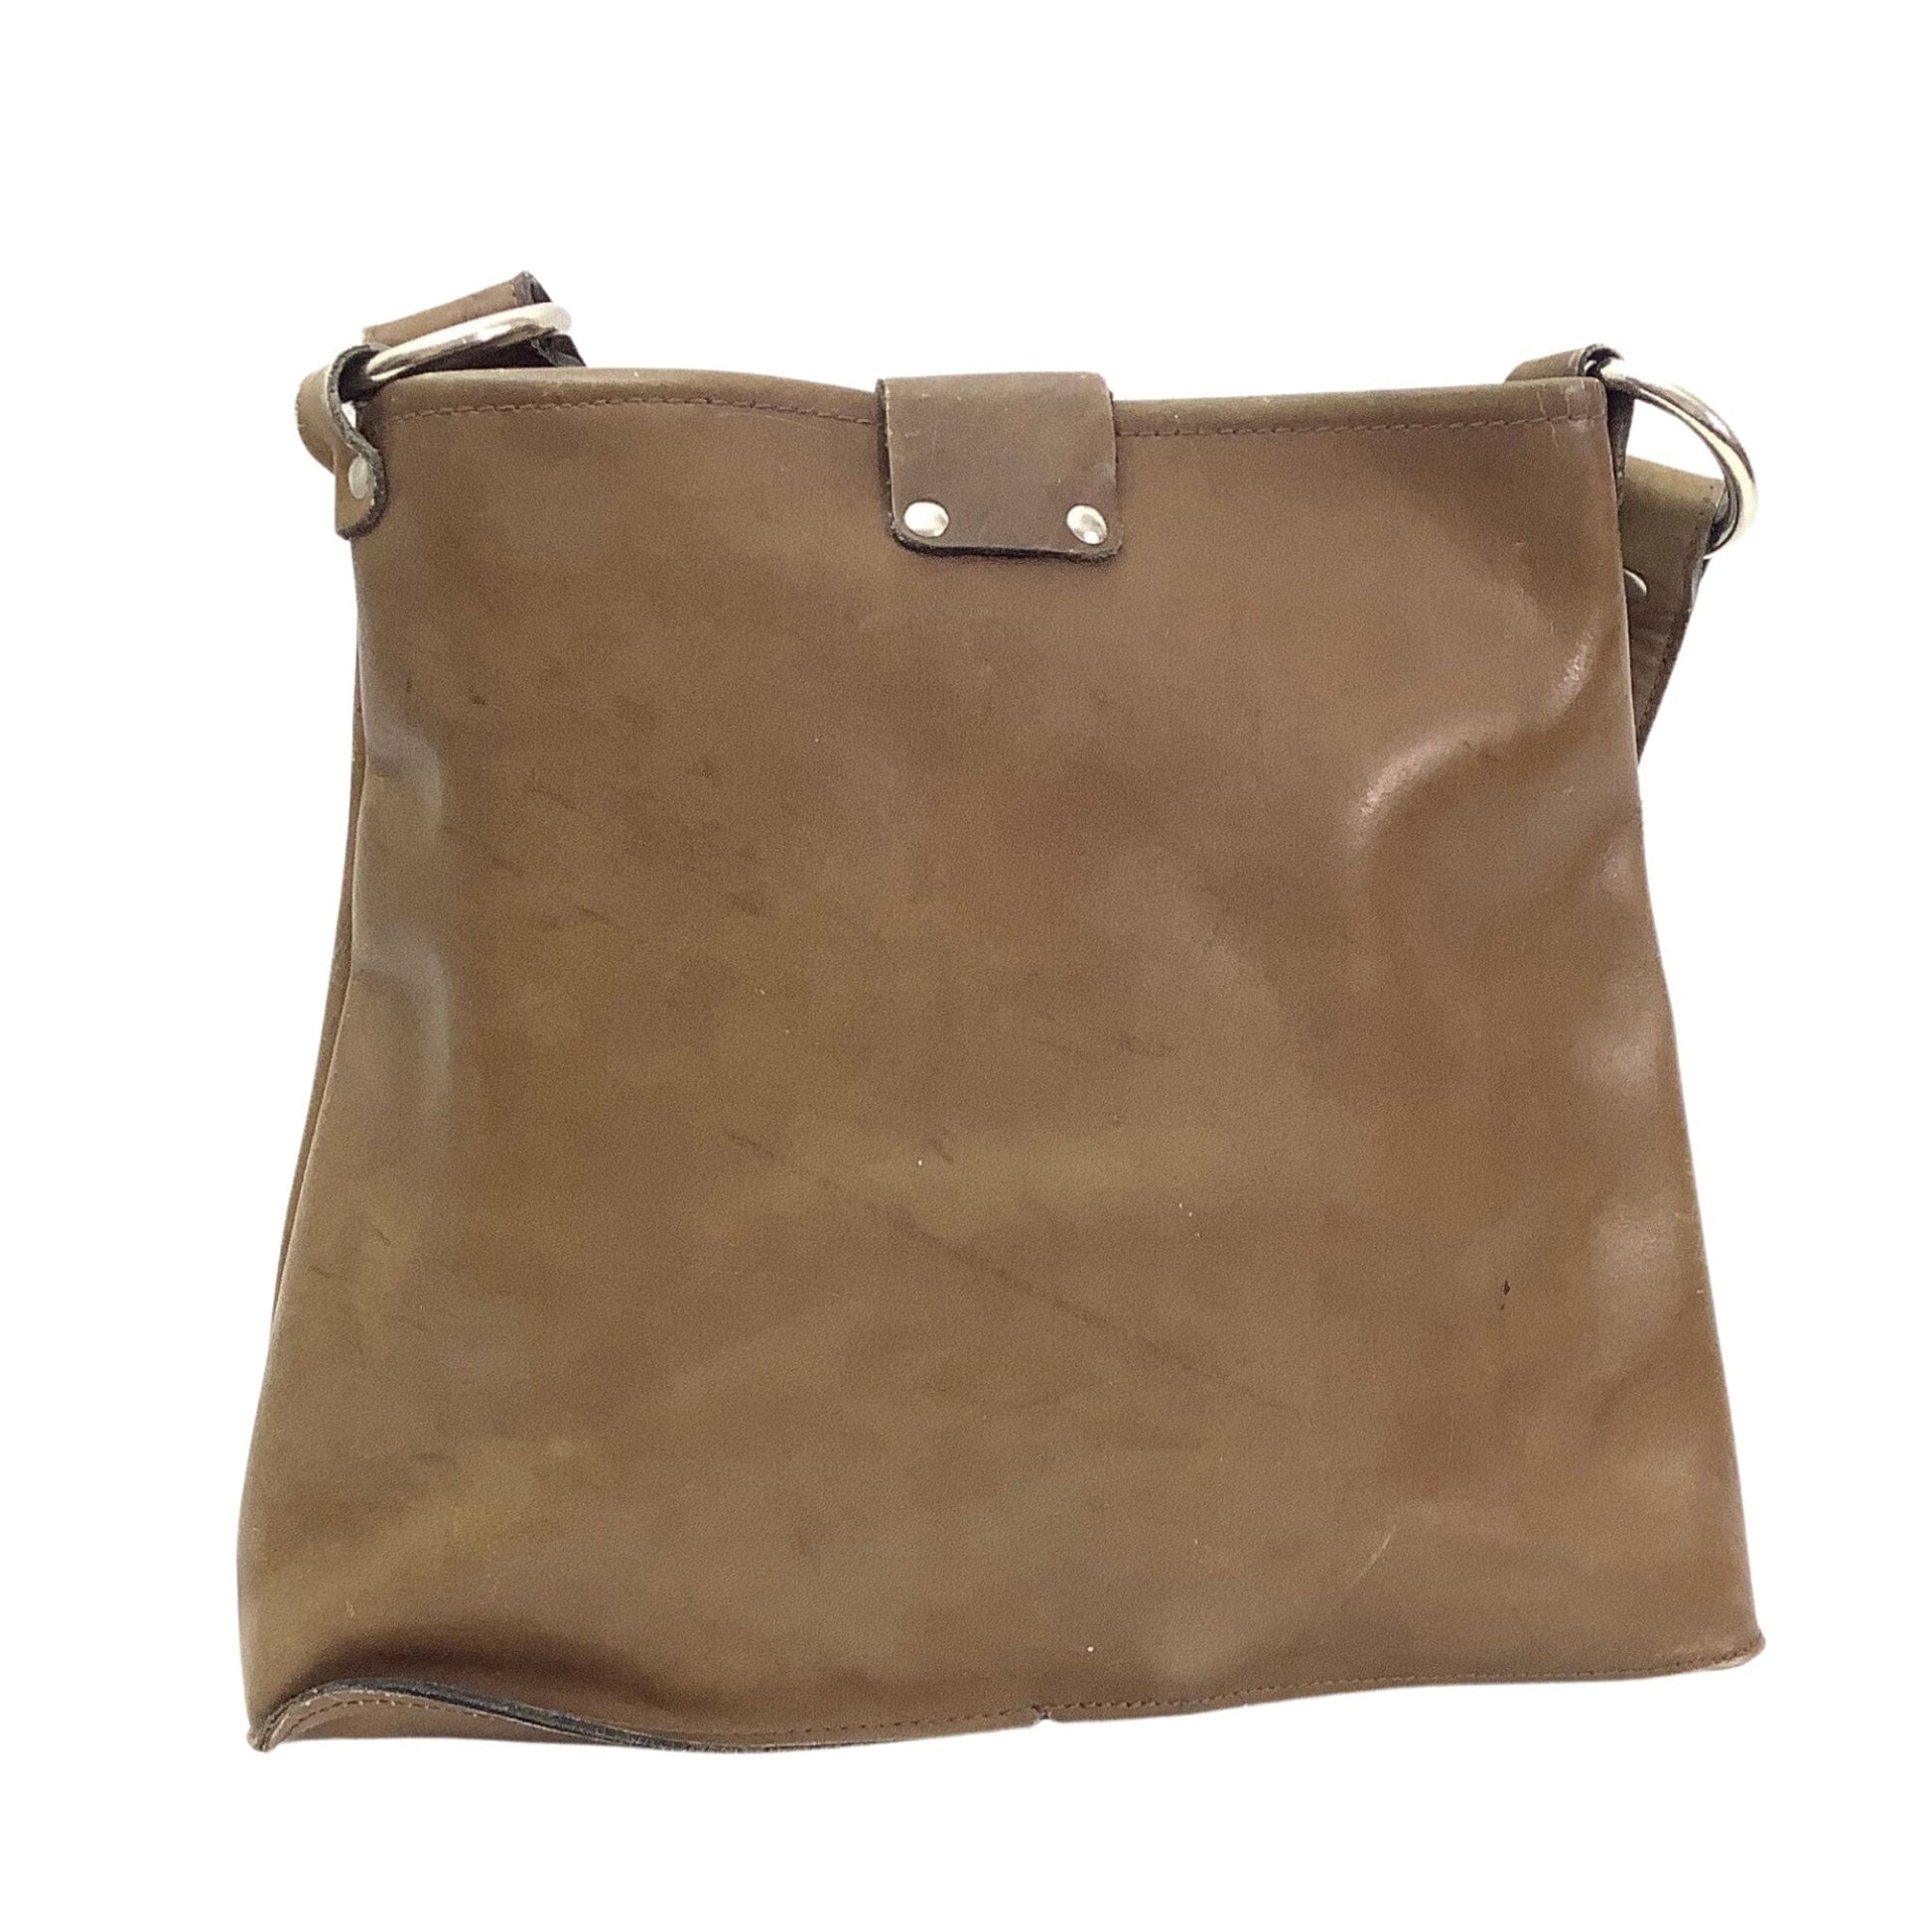 1970s Western Studded Bag Tan / Leather / Vintage 1970s